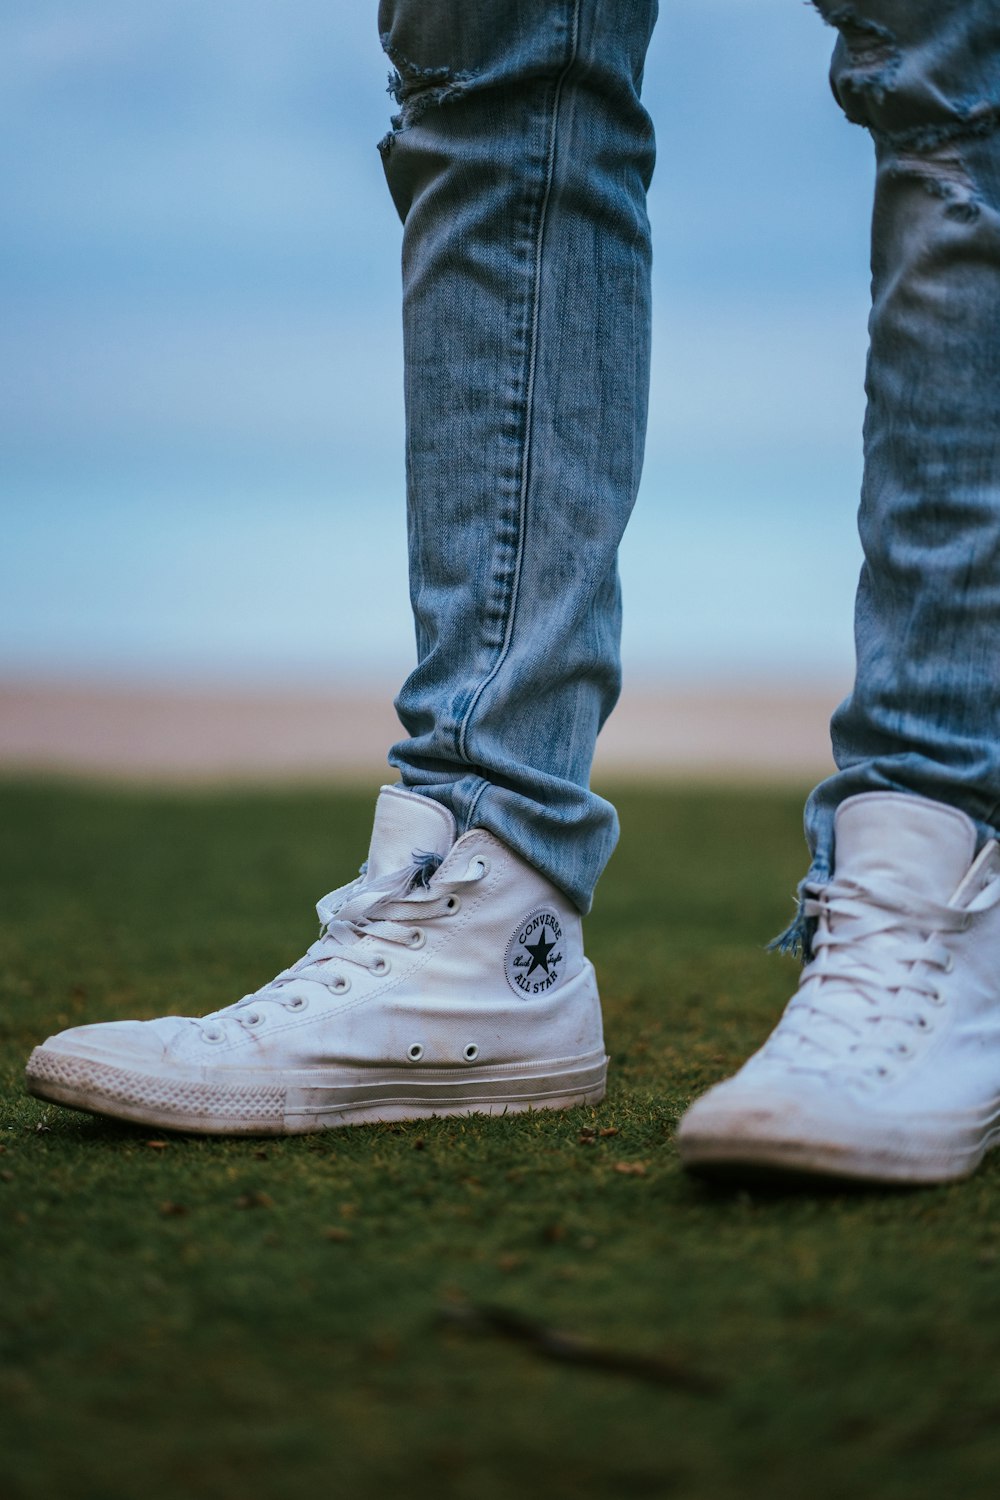 Man wearing white converse shoes photo – Free Florida on Unsplash